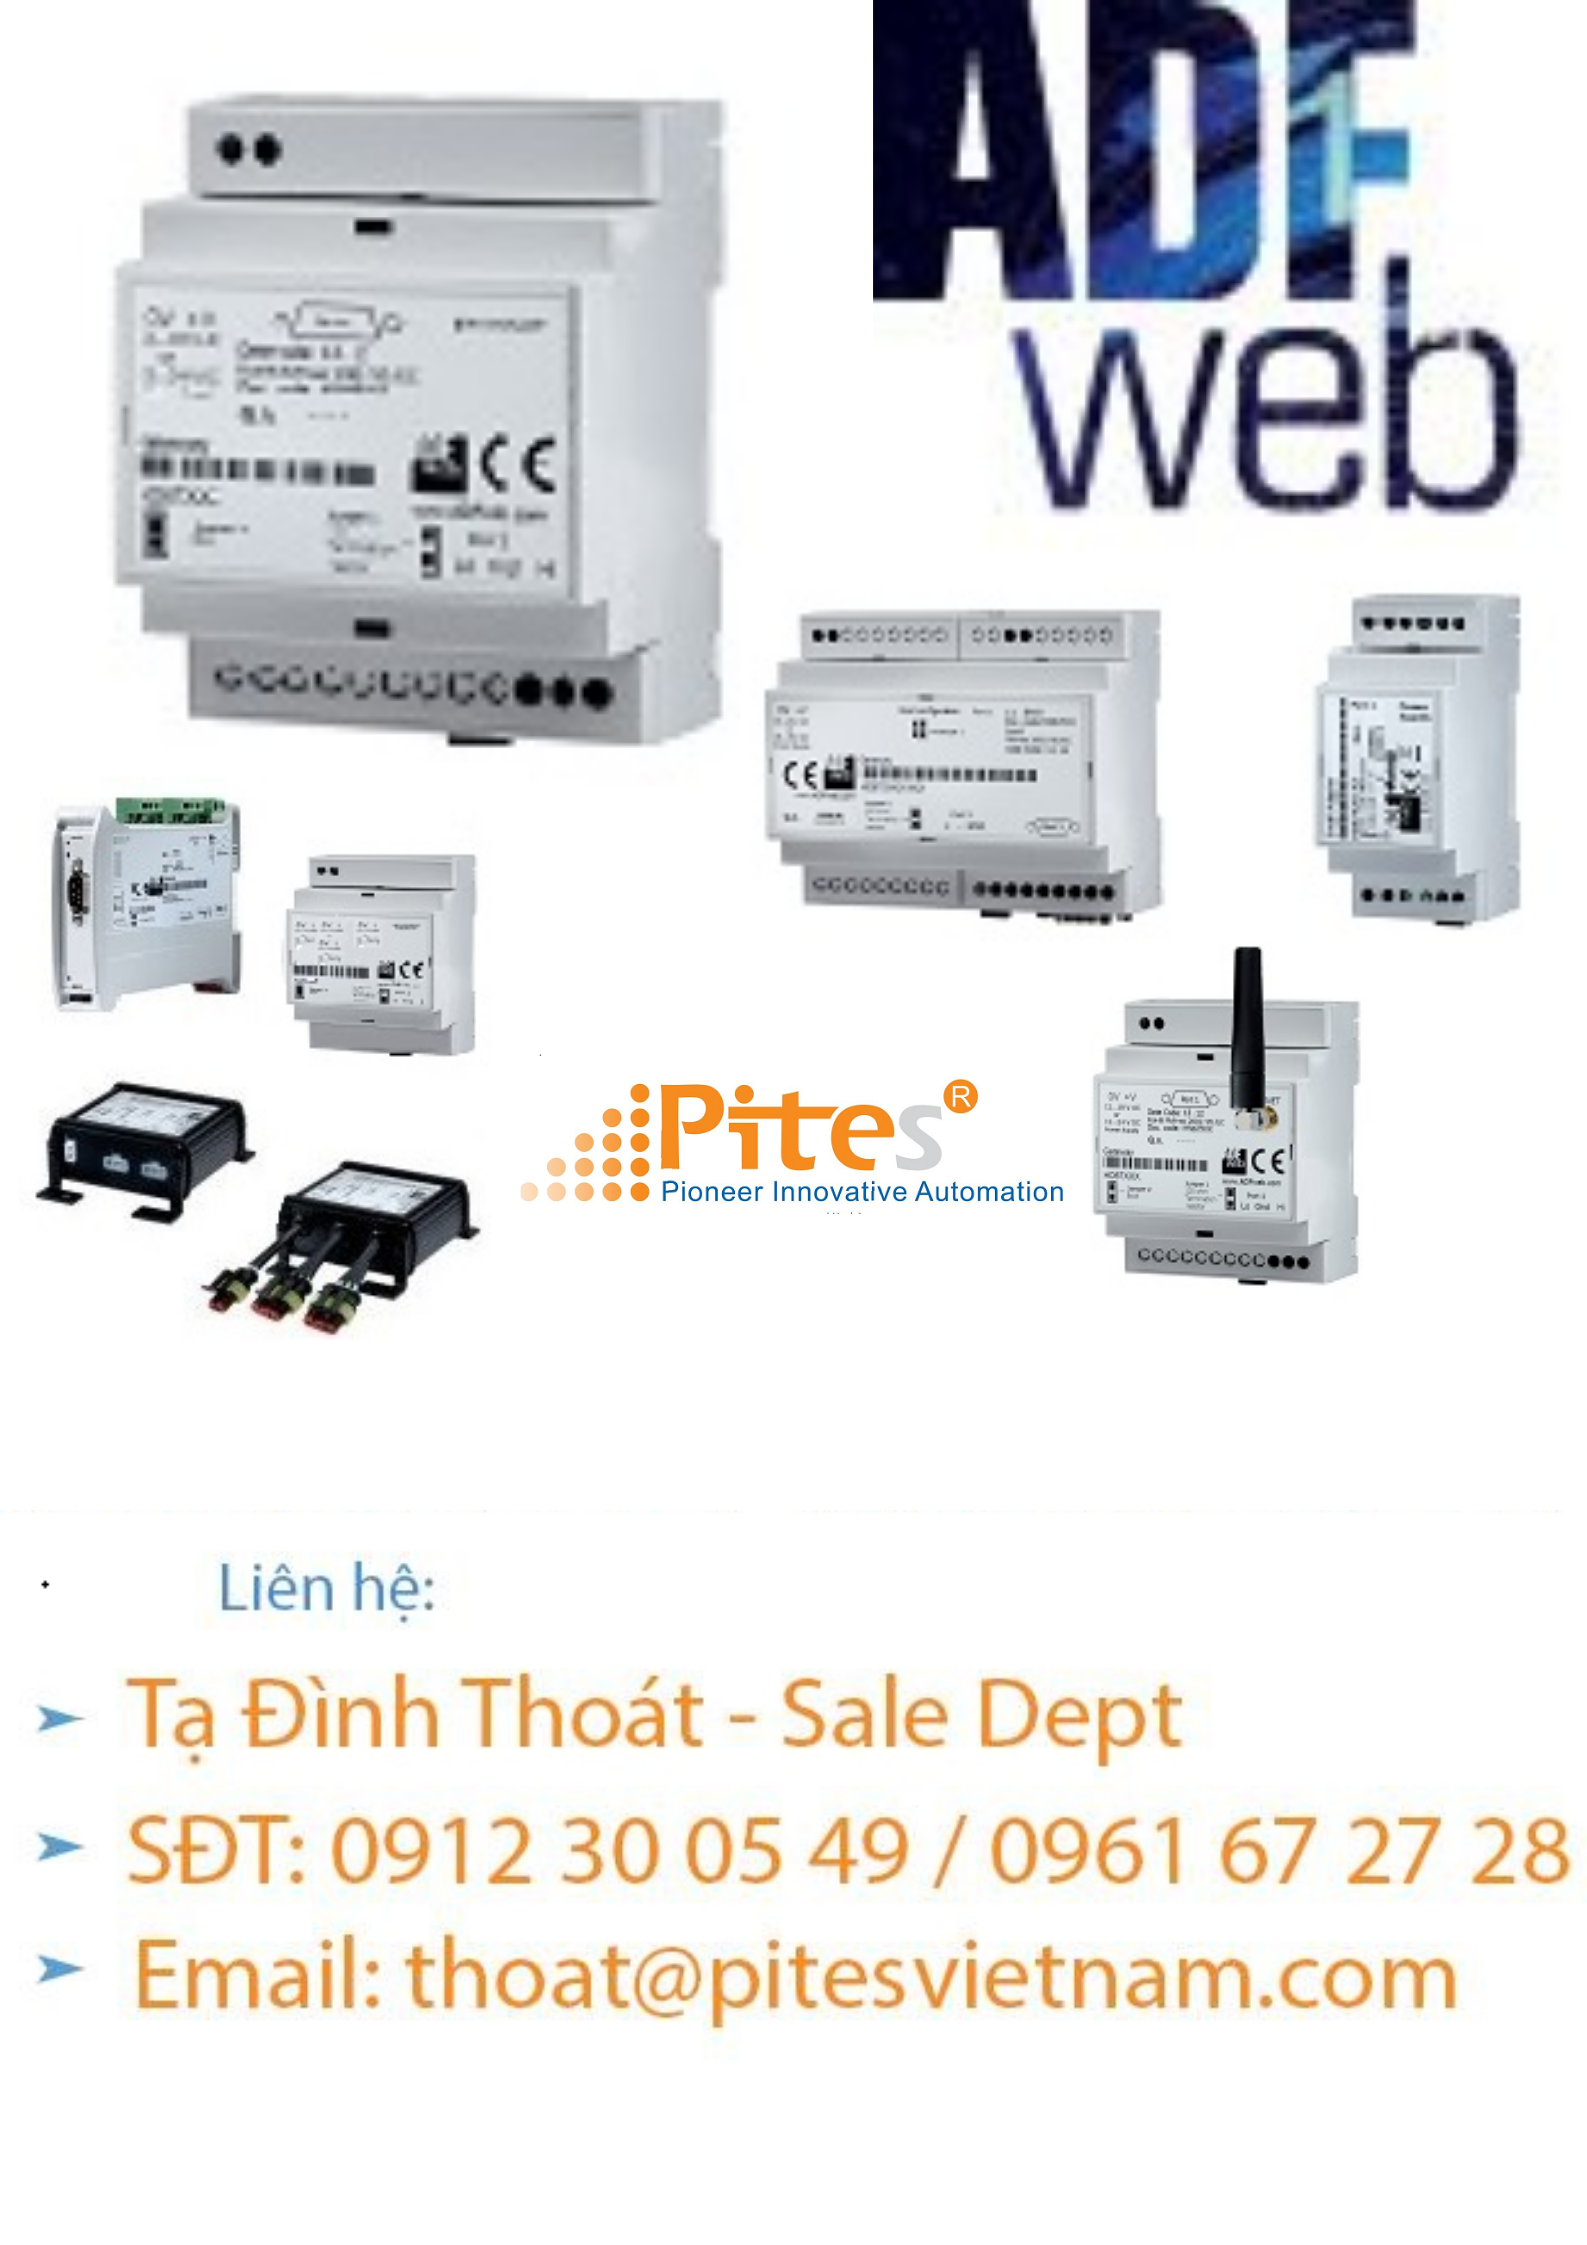 adf-web-vietnam-dai-ly-adfweb-viet-nam-hd67056-b2-160-converter.png